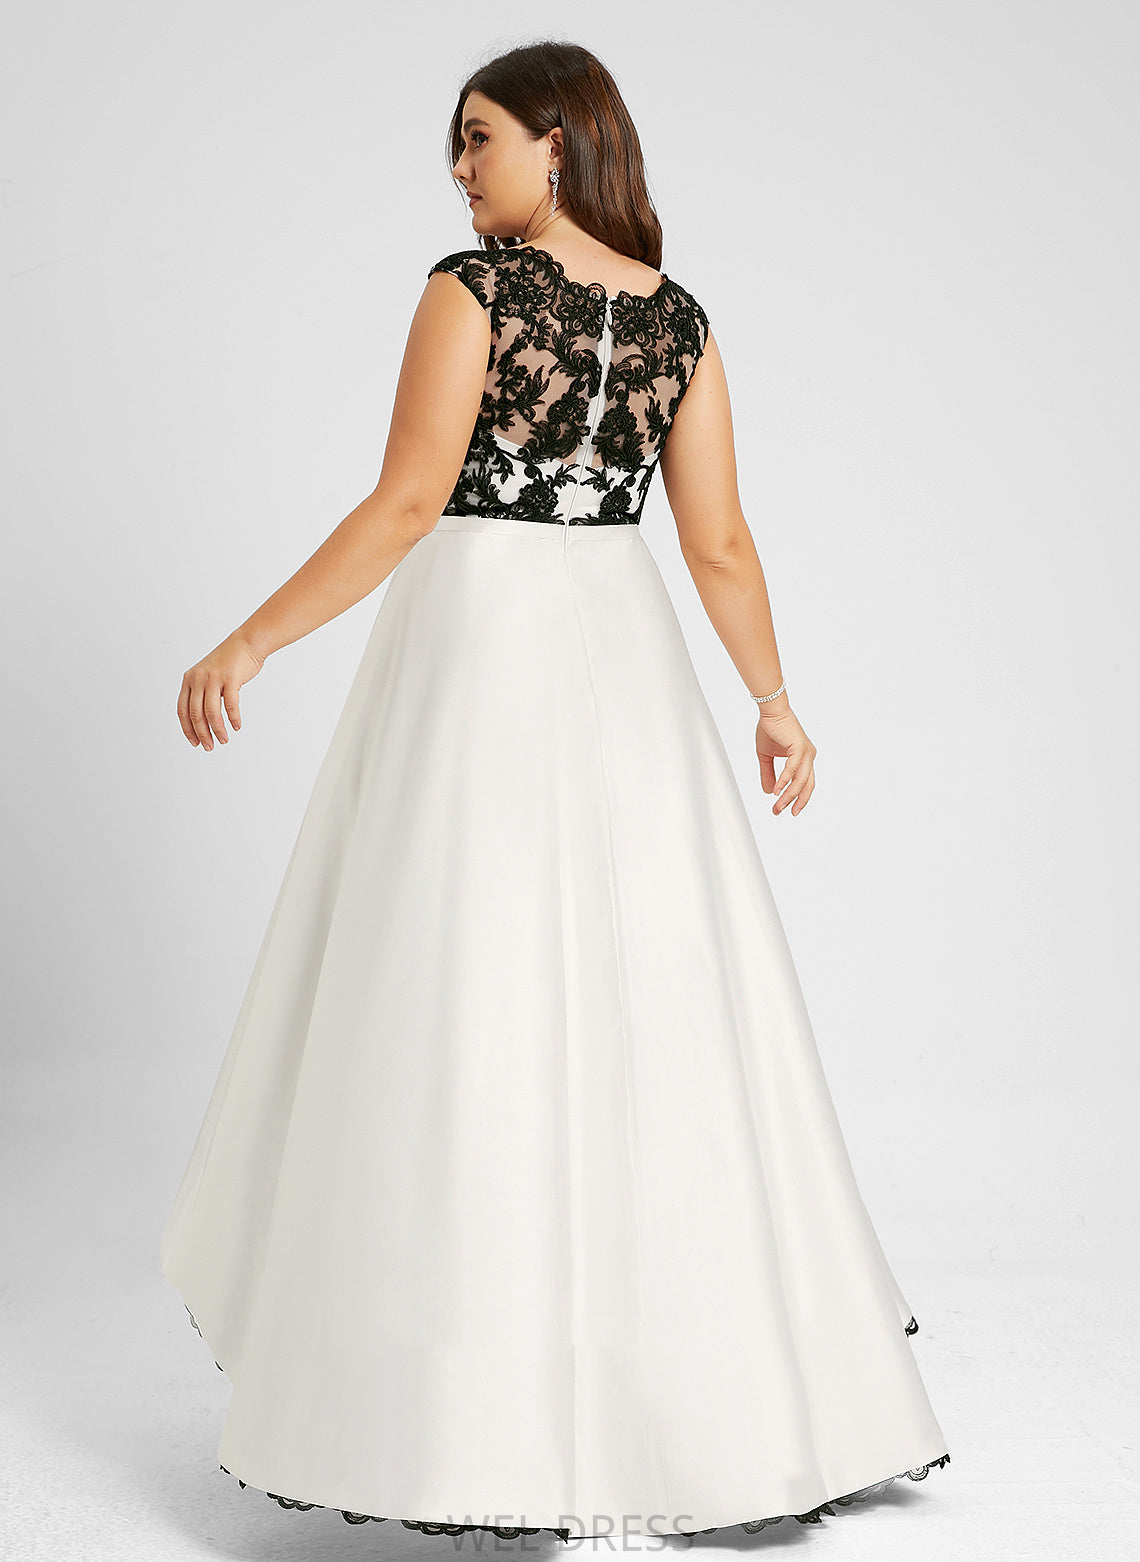 Illusion Dress Asymmetrical Wedding Dresses Tina Wedding Lace Satin Scoop A-Line